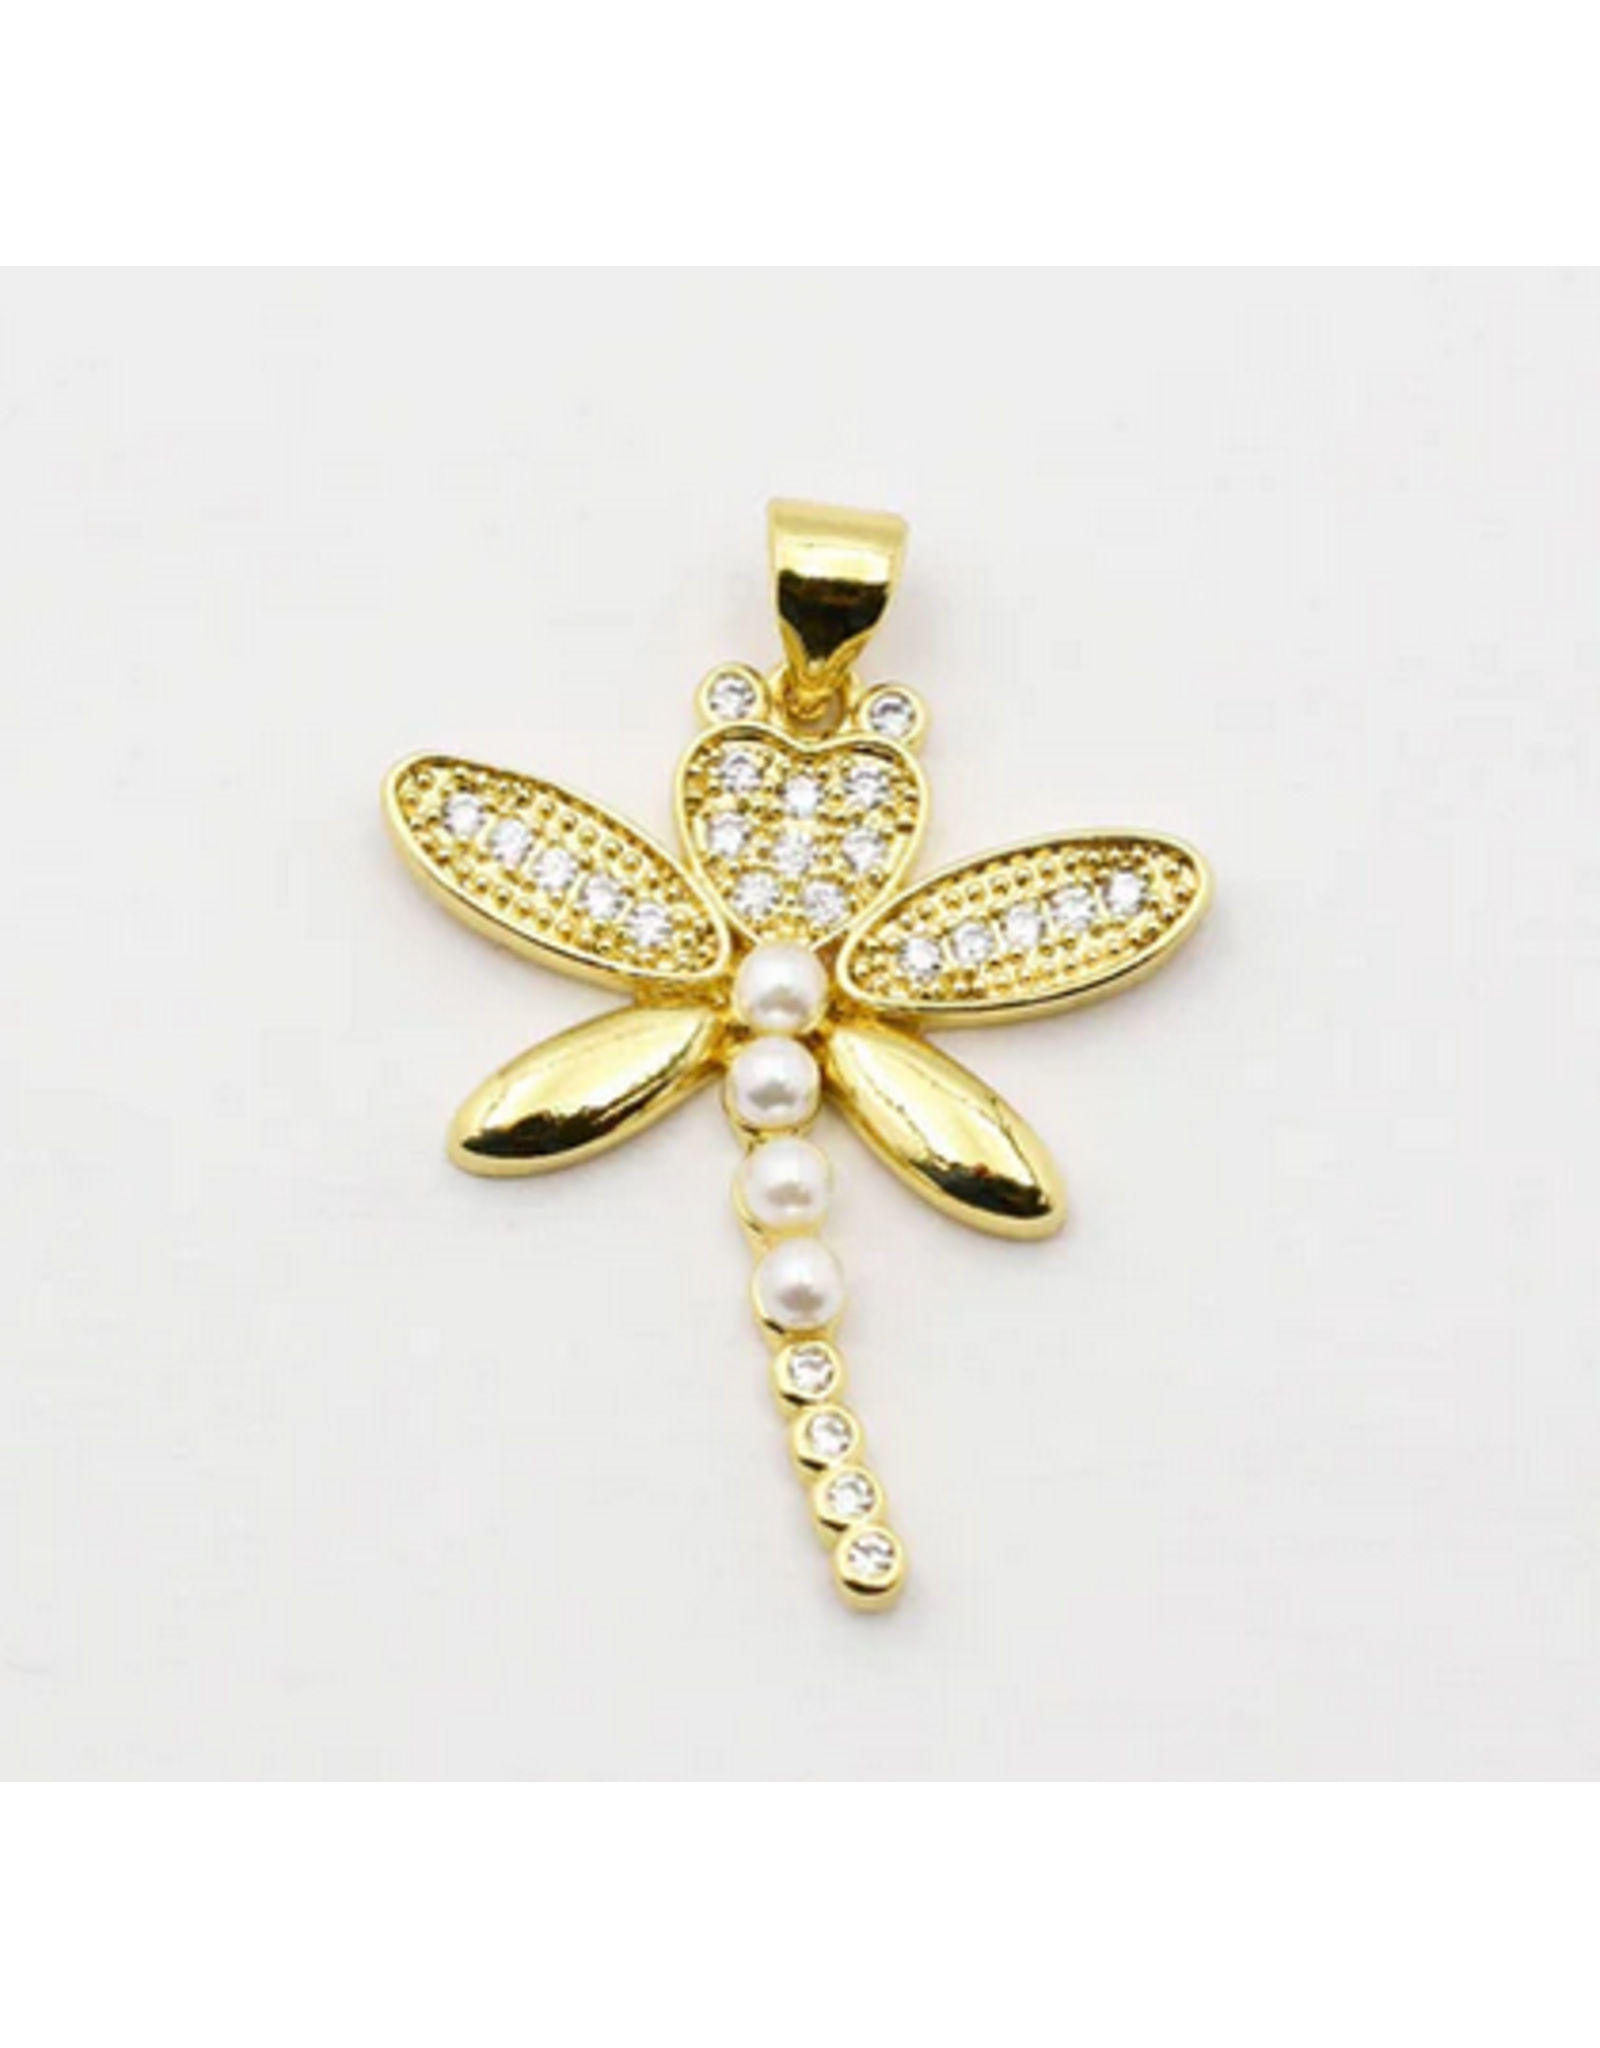 Treasure Jewels Dragonfly Charm